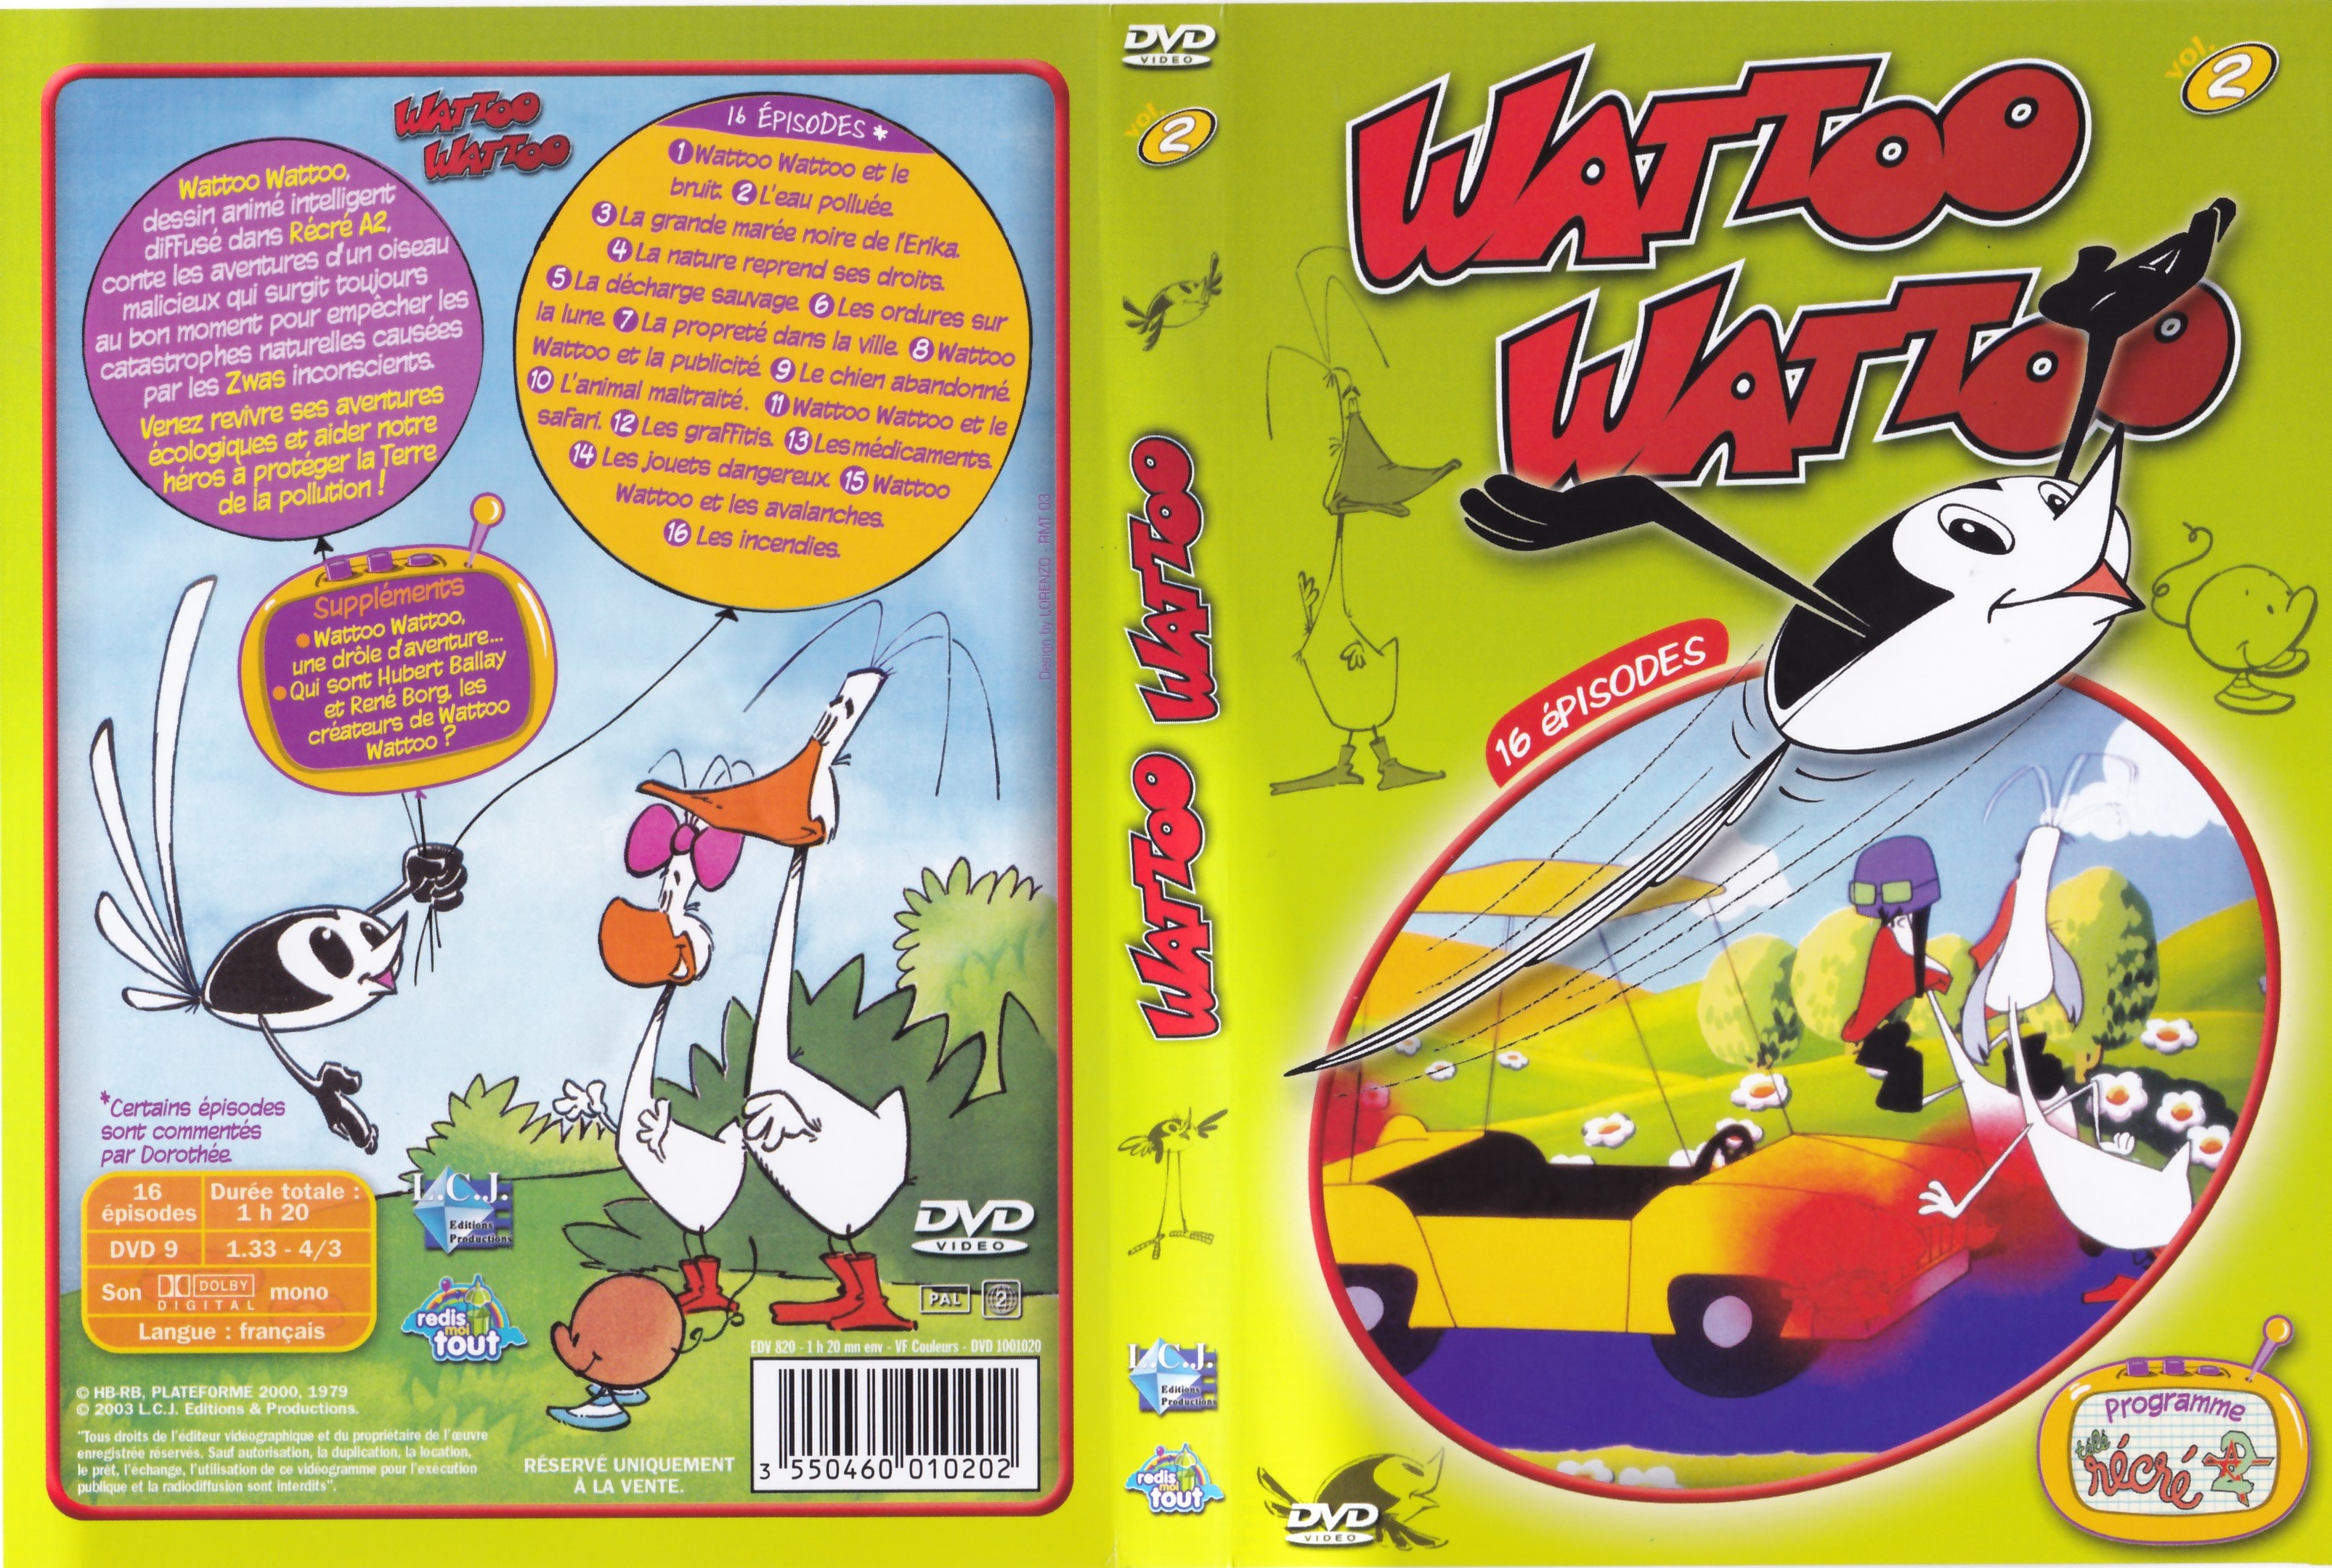 Jaquette DVD Wattoo Wattoo vol 2